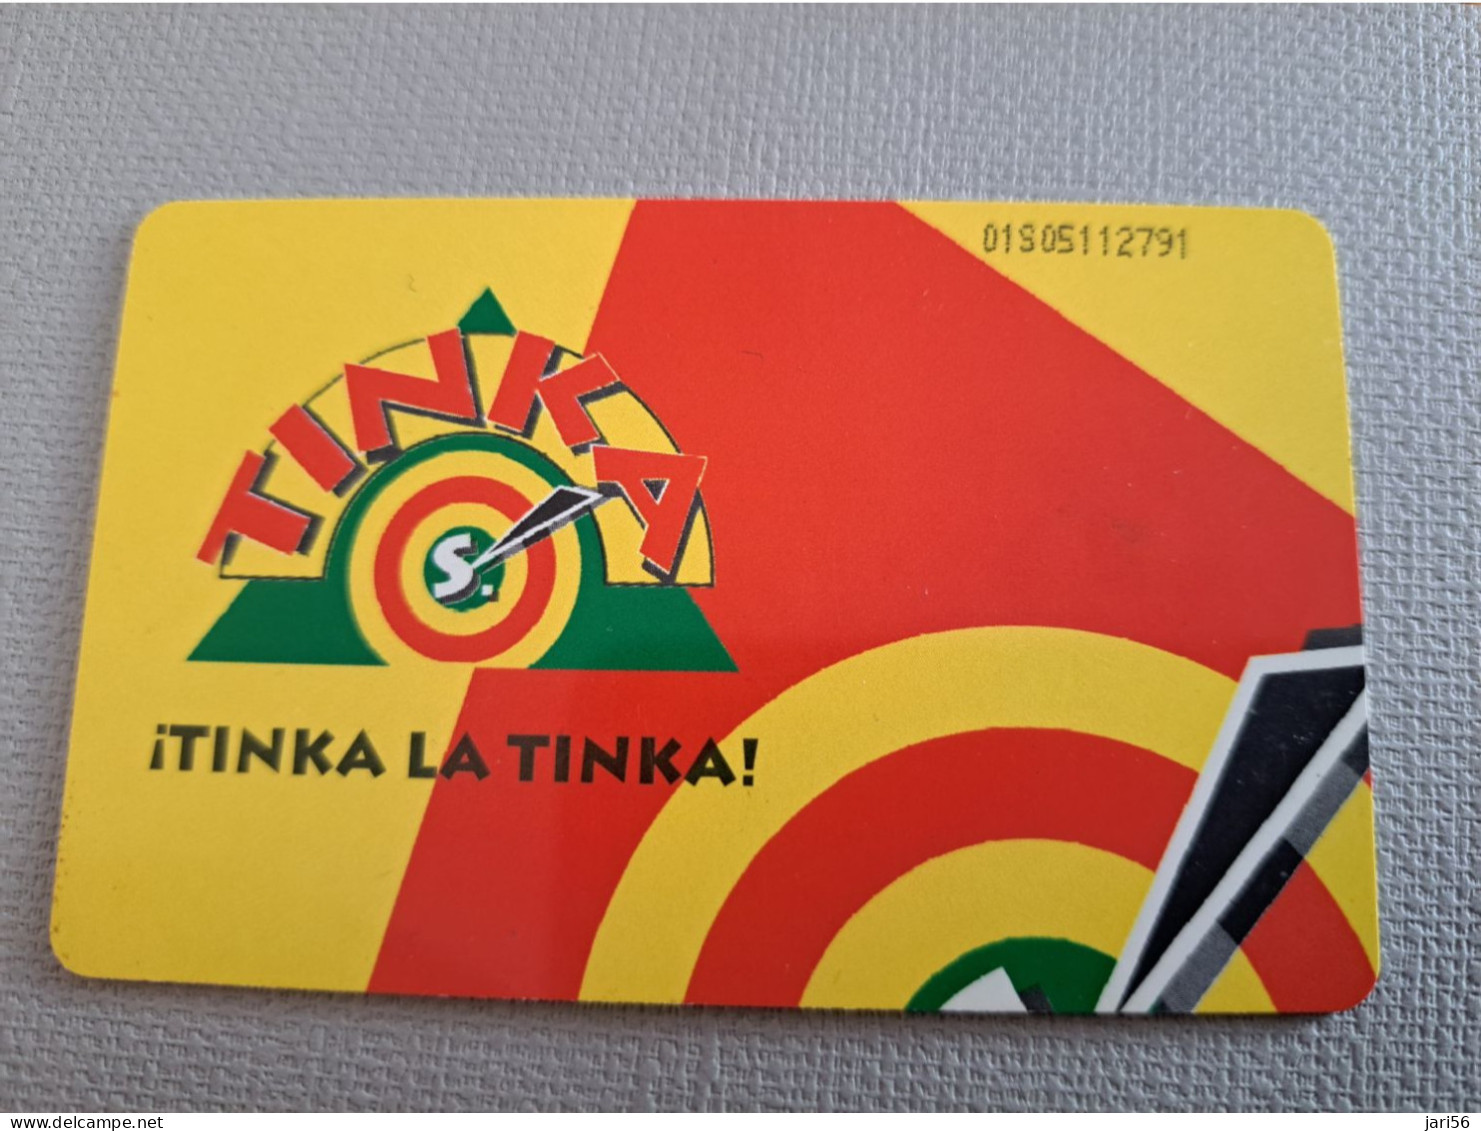 PERU   CHIPCARD   5,00 $ / TINKA LA TINKA/ NICE LADY IN COSTUME     Fine Used Card  ** 15130** - Pérou